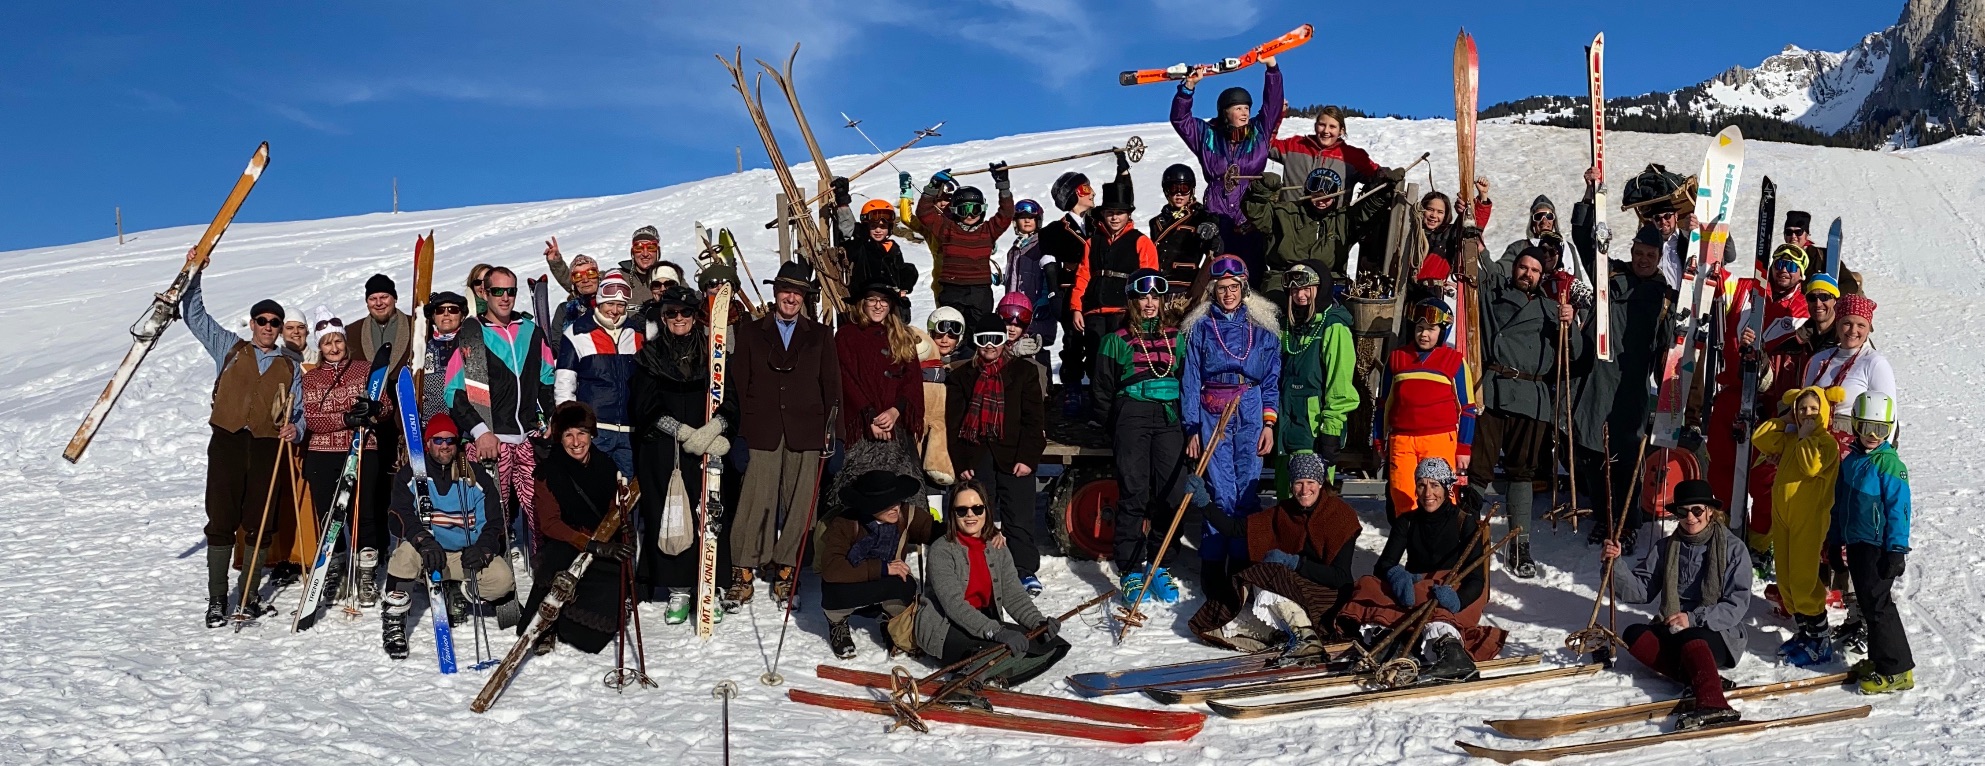 Jubiläumsjahr 2022: Nostalgie-Skirennen